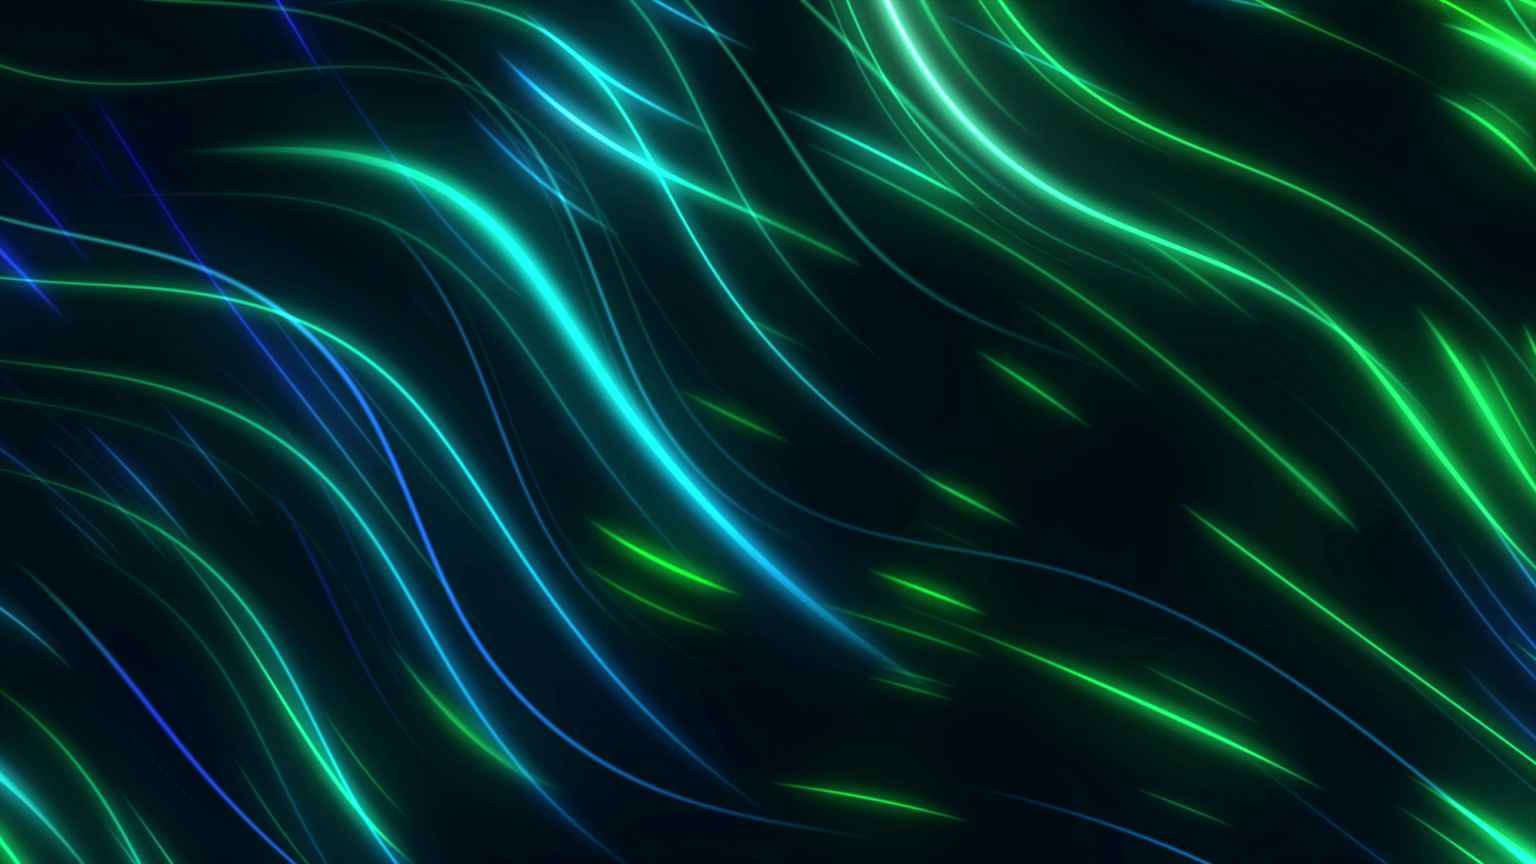 4K Blue & Green Wavy Motion Background || VFX Free To Use 4K